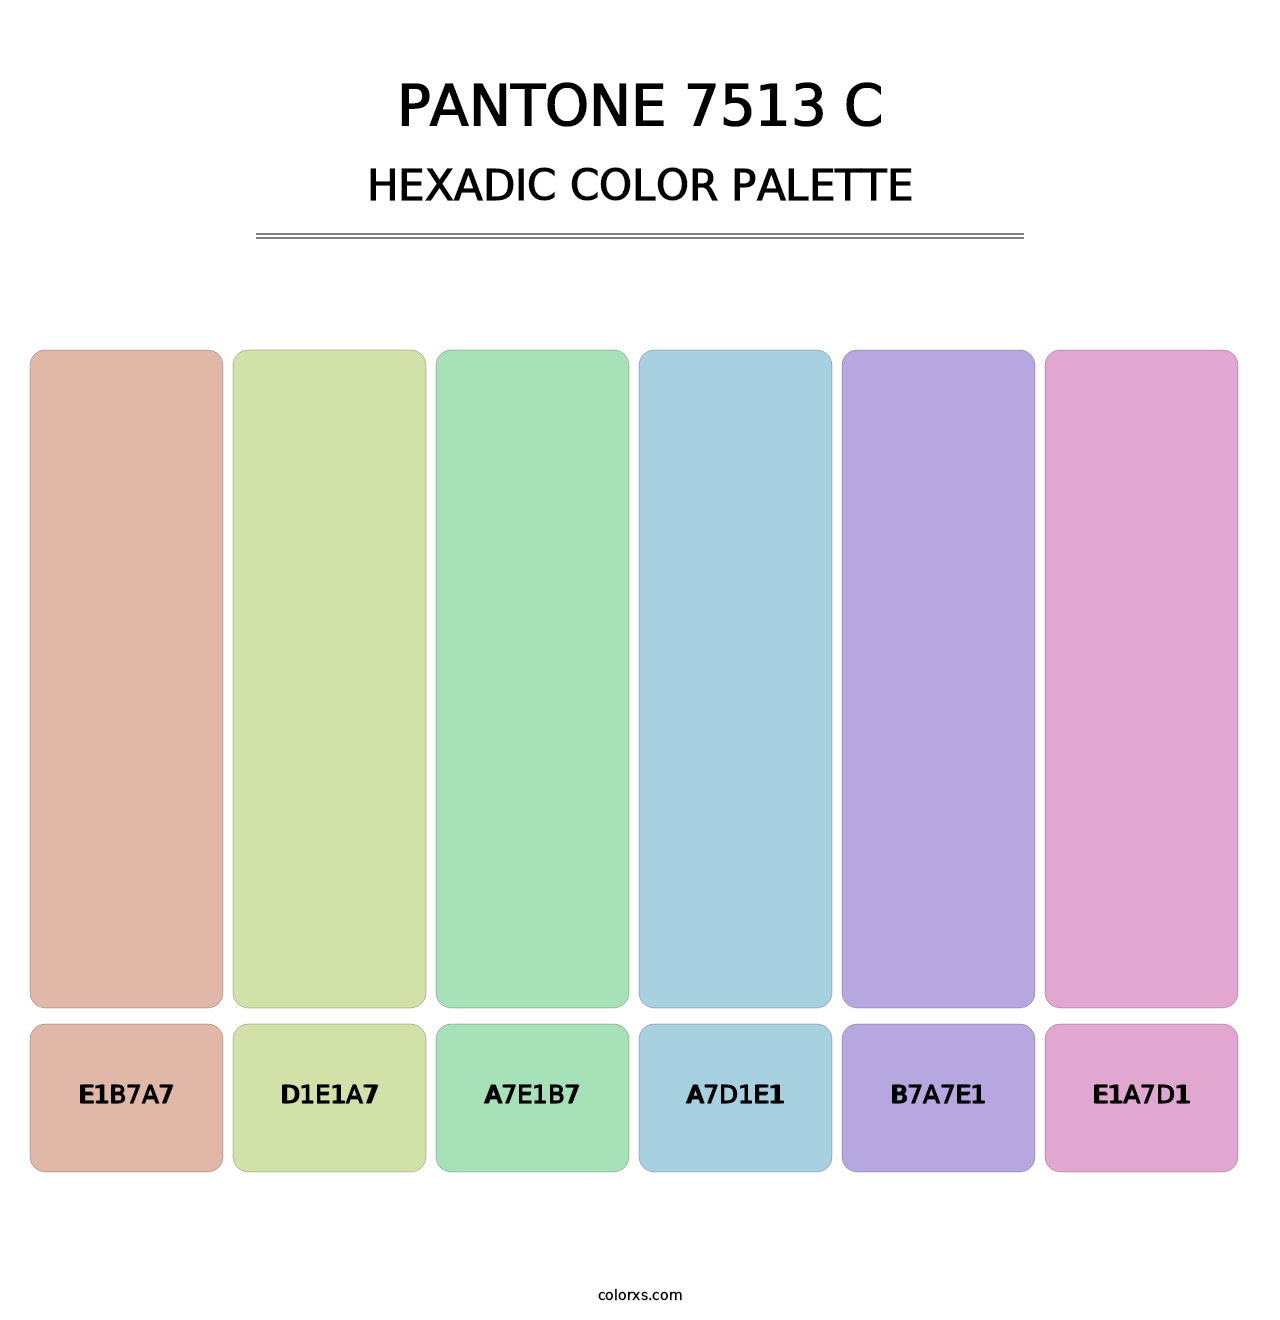 PANTONE 7513 C - Hexadic Color Palette